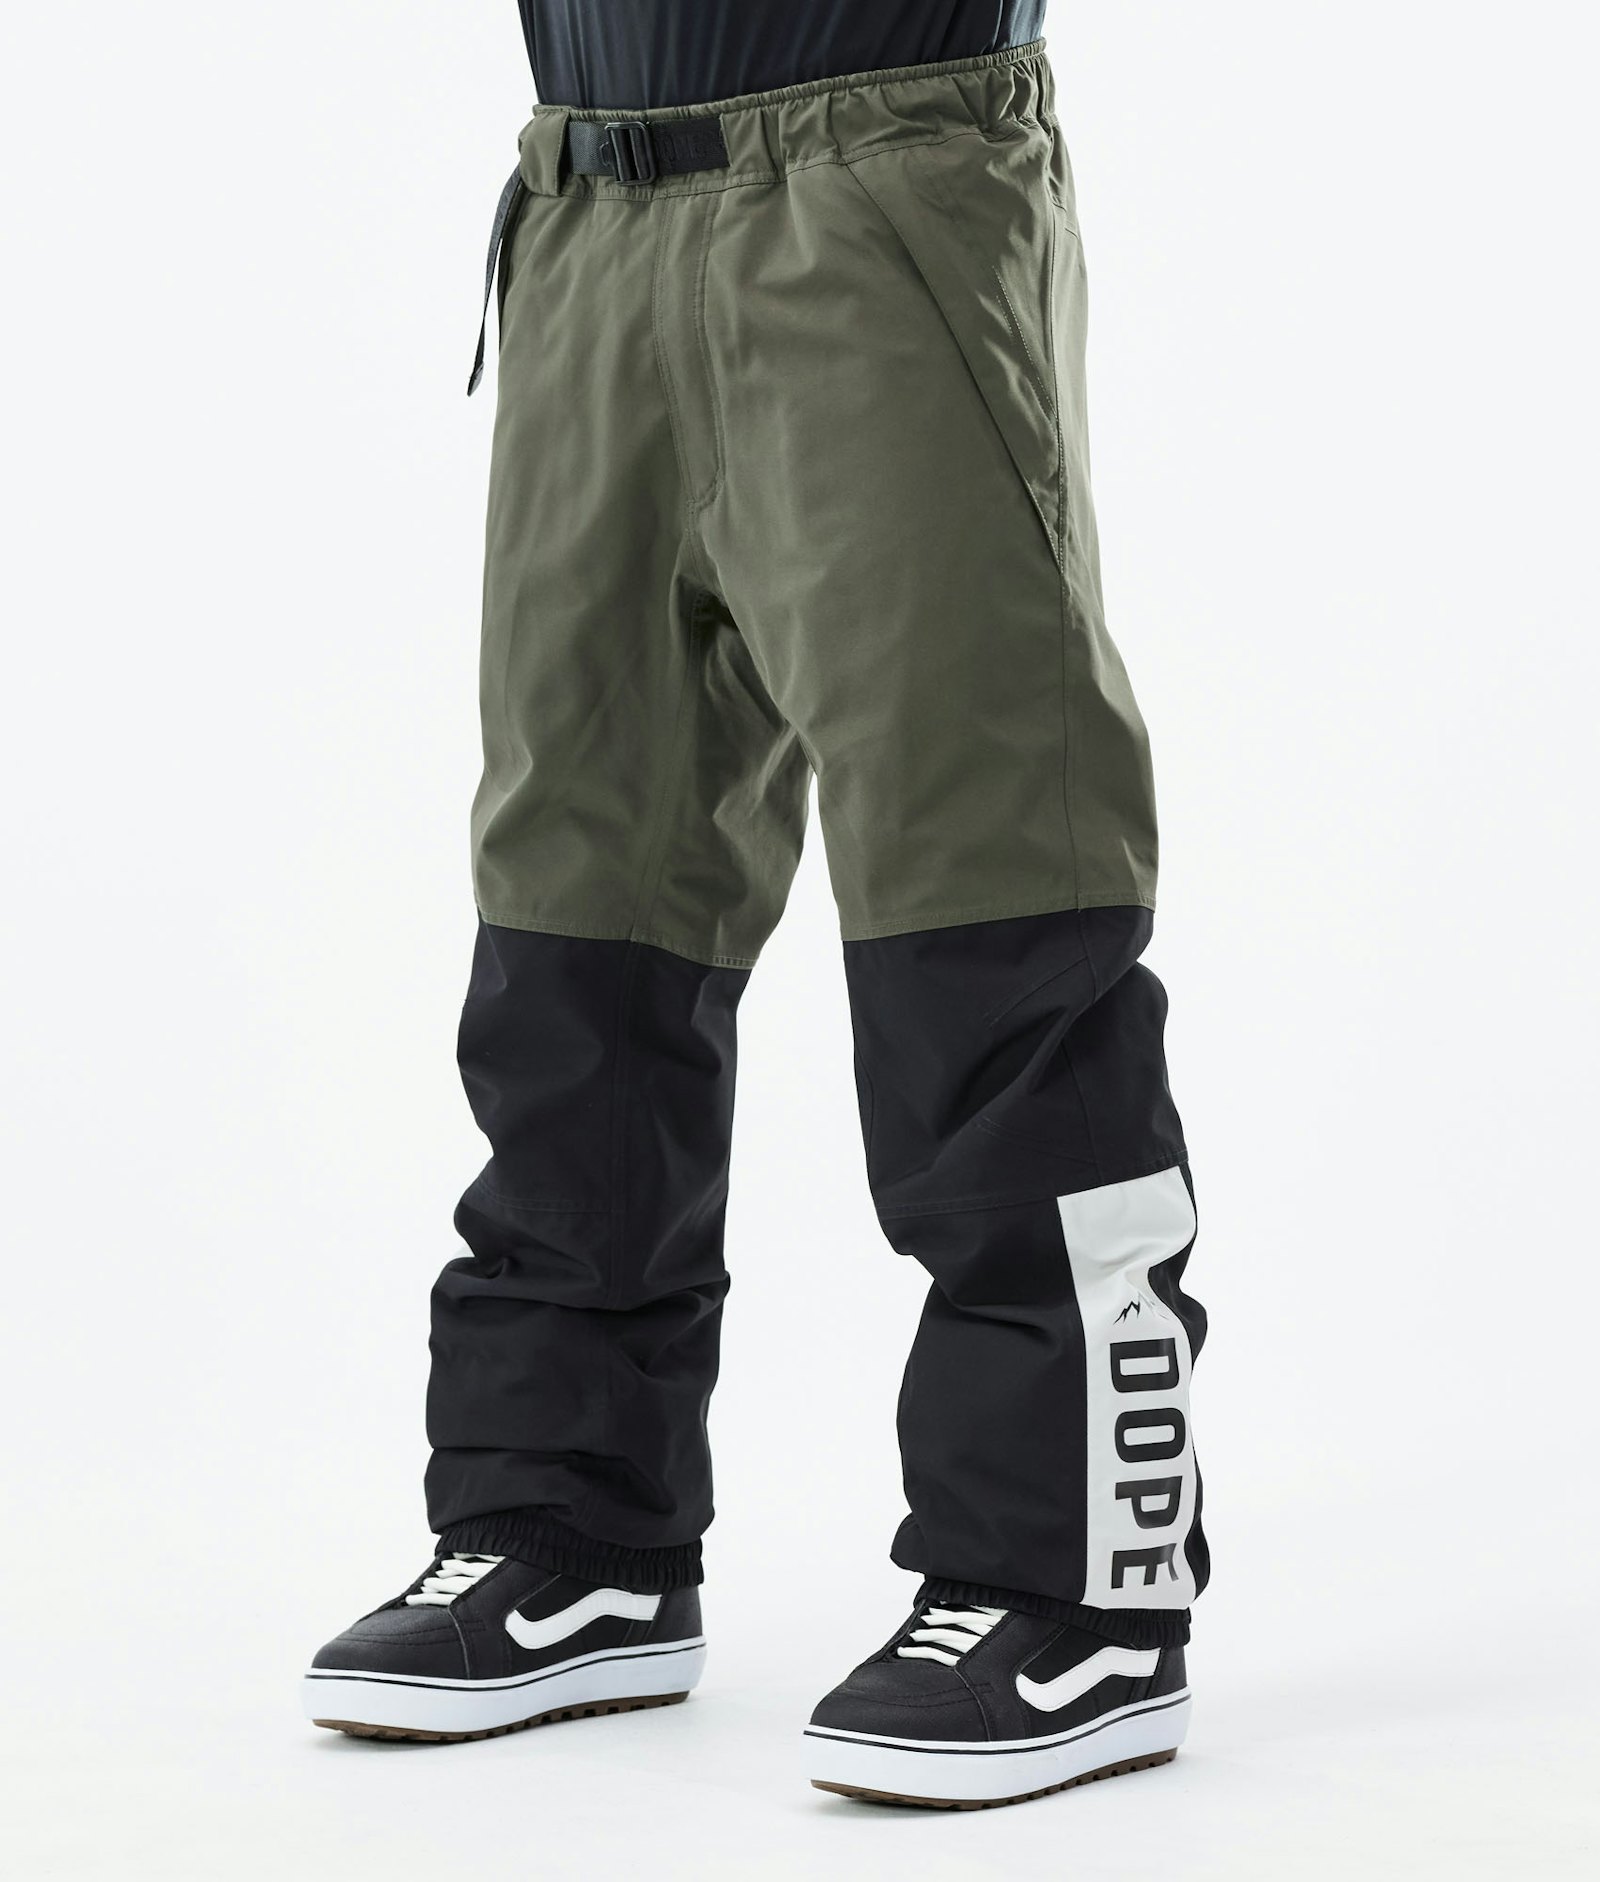 Blizzard LE Pantalon de Snowboard Homme Limited Edition Multicolor Olive Green